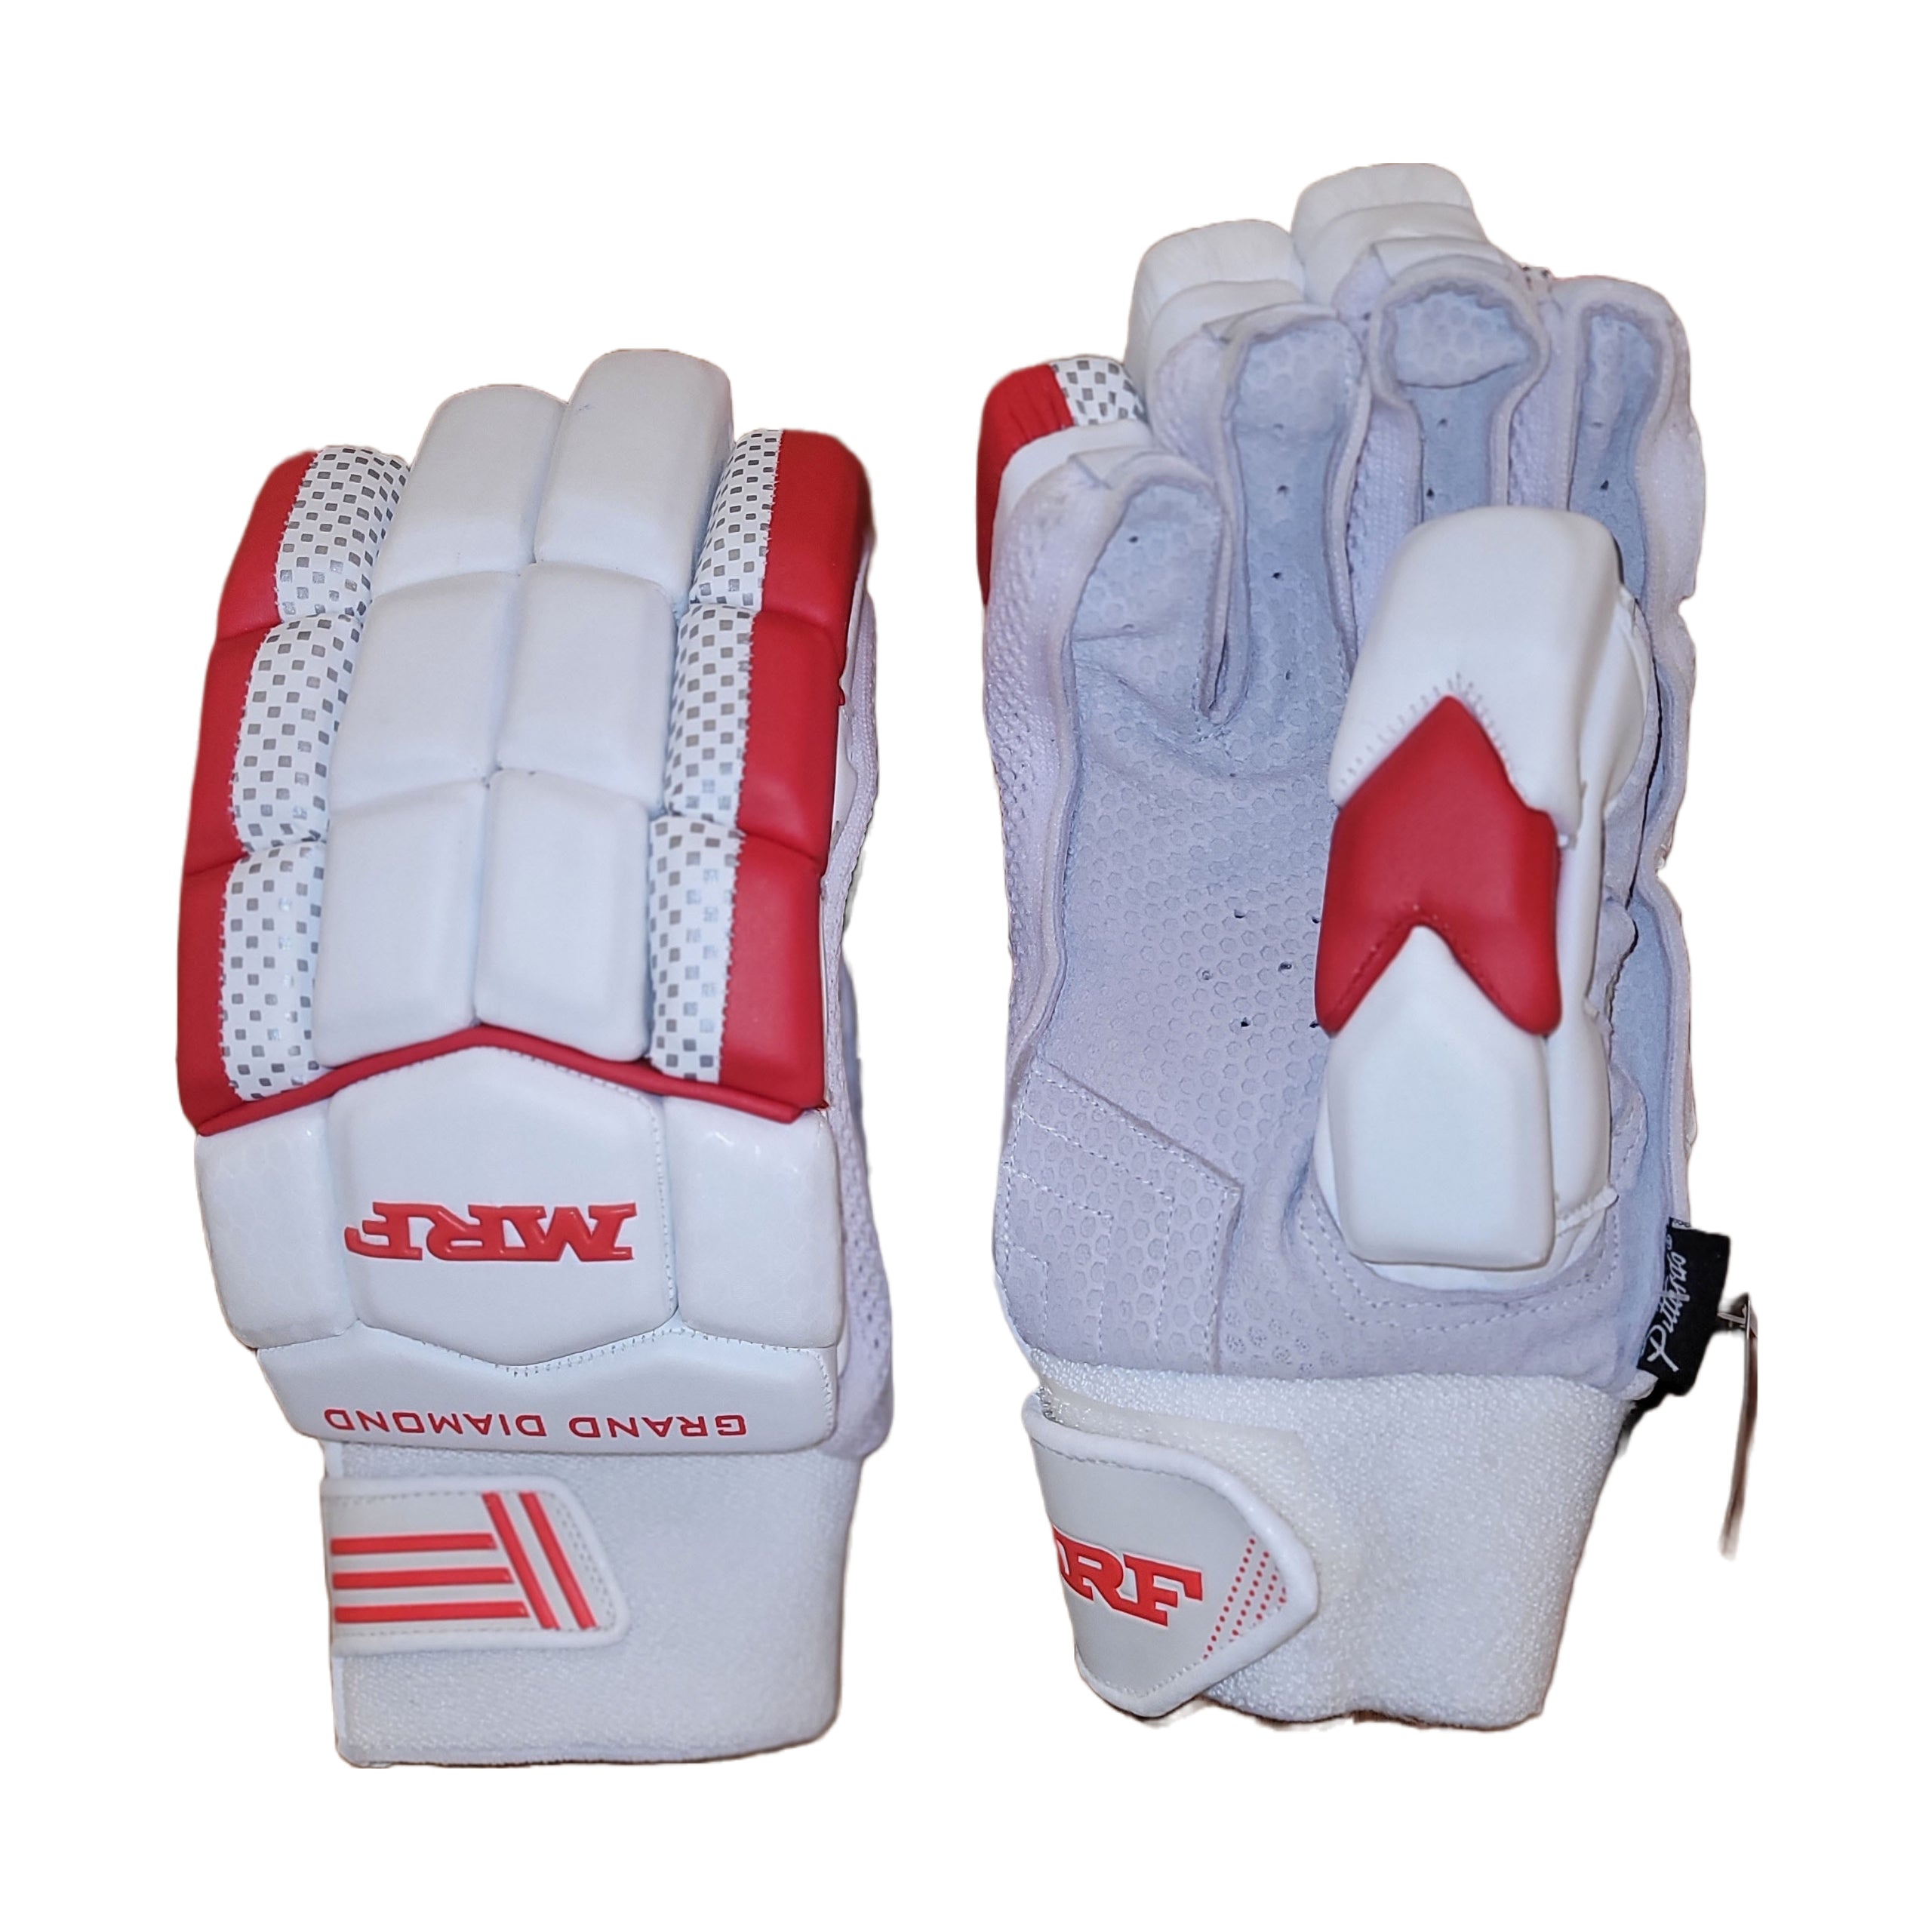 MRF Grand Diamond Batting Gloves